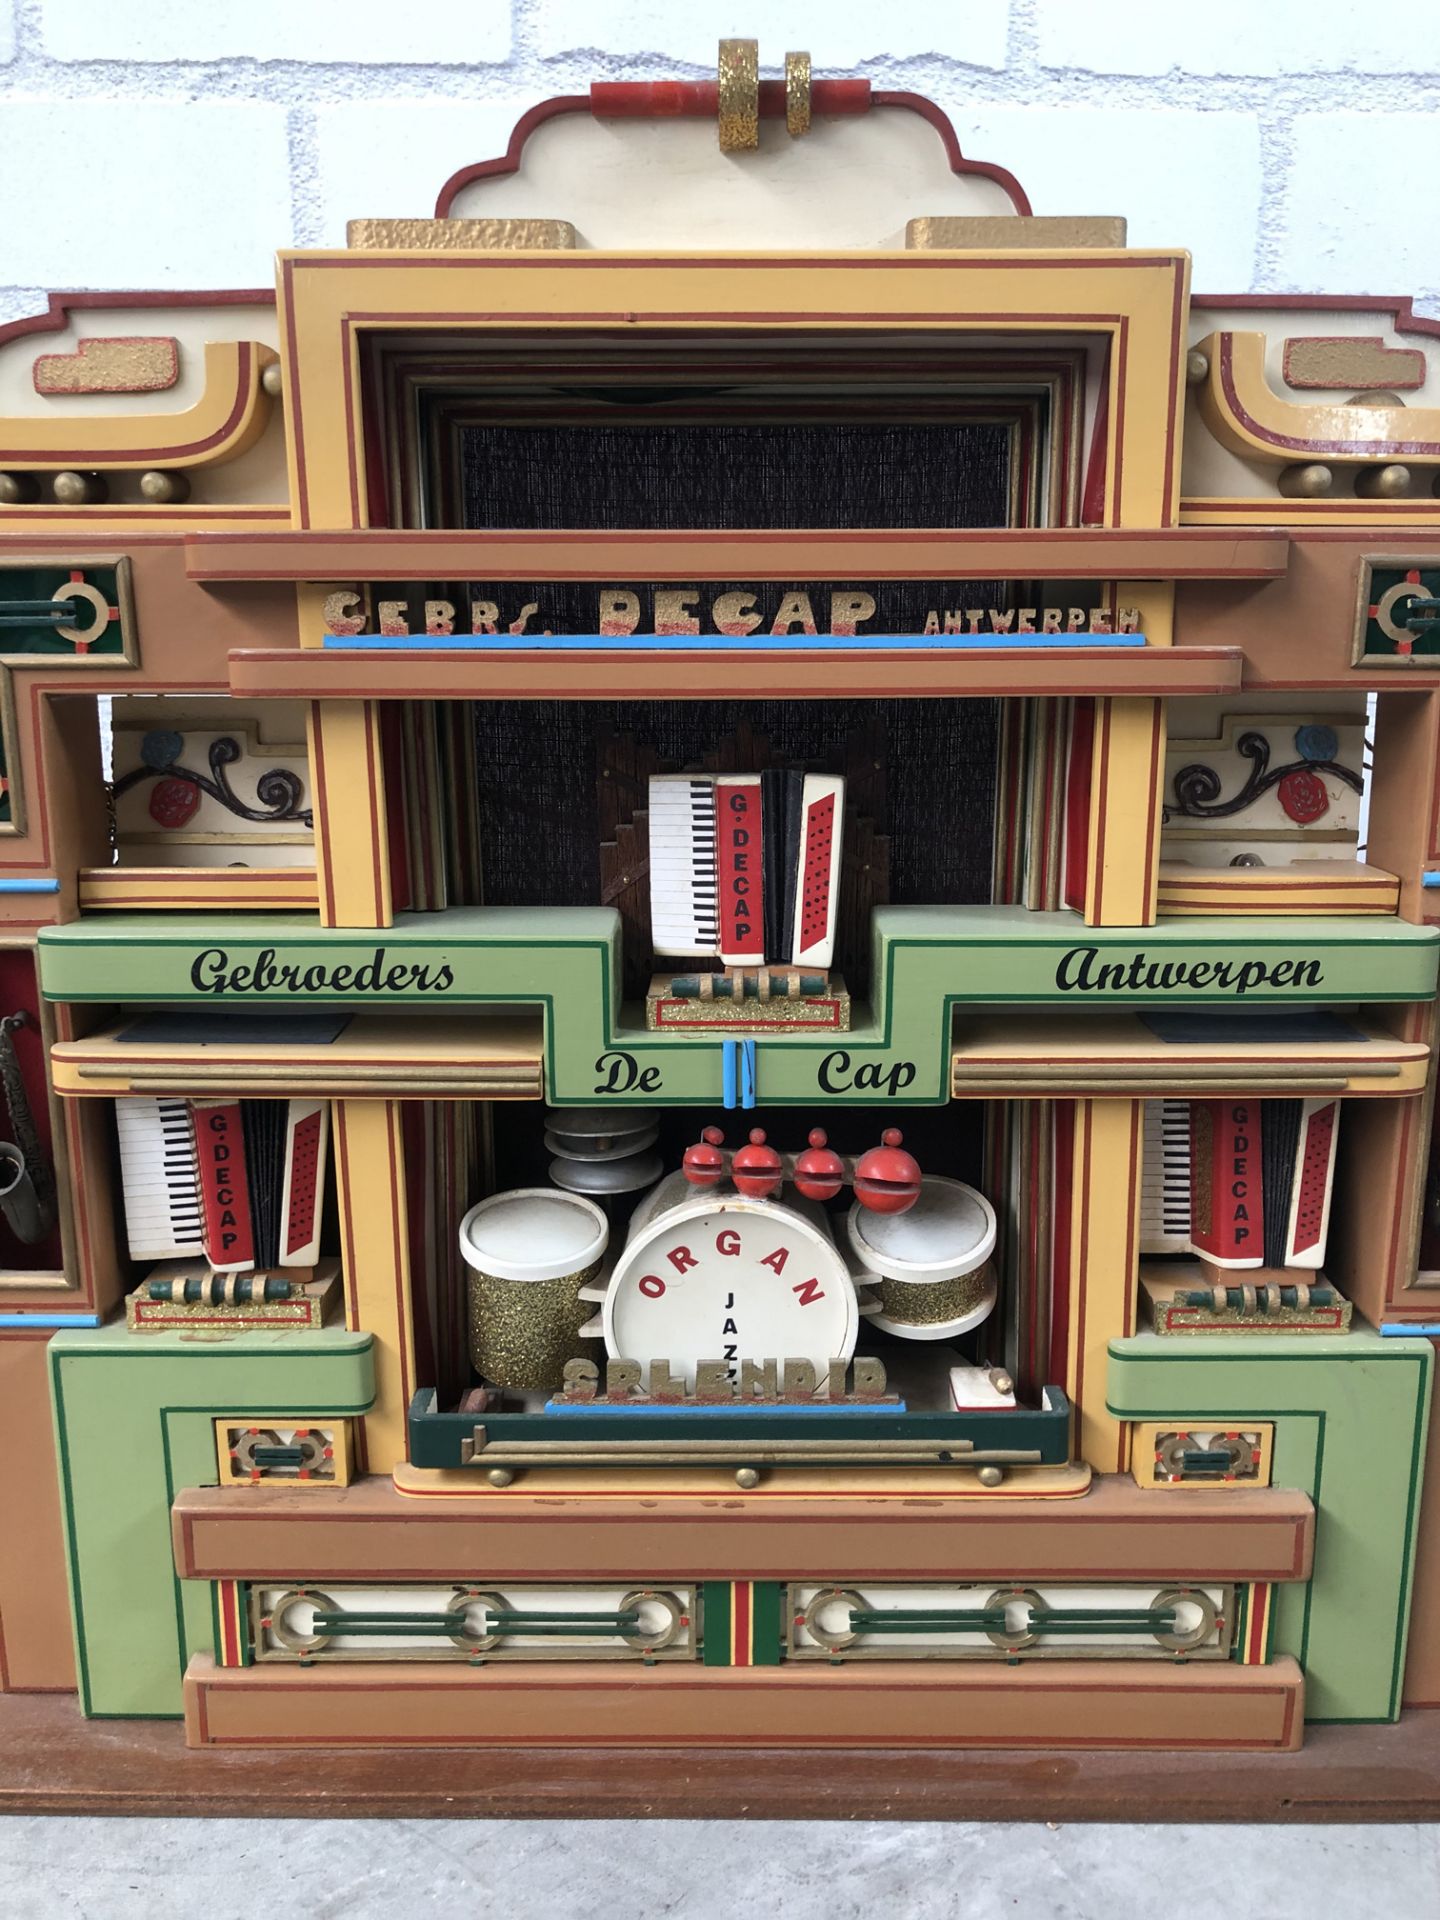 Scale Model of 121-key Decap "De Splendid" Dance Organ - Image 6 of 10